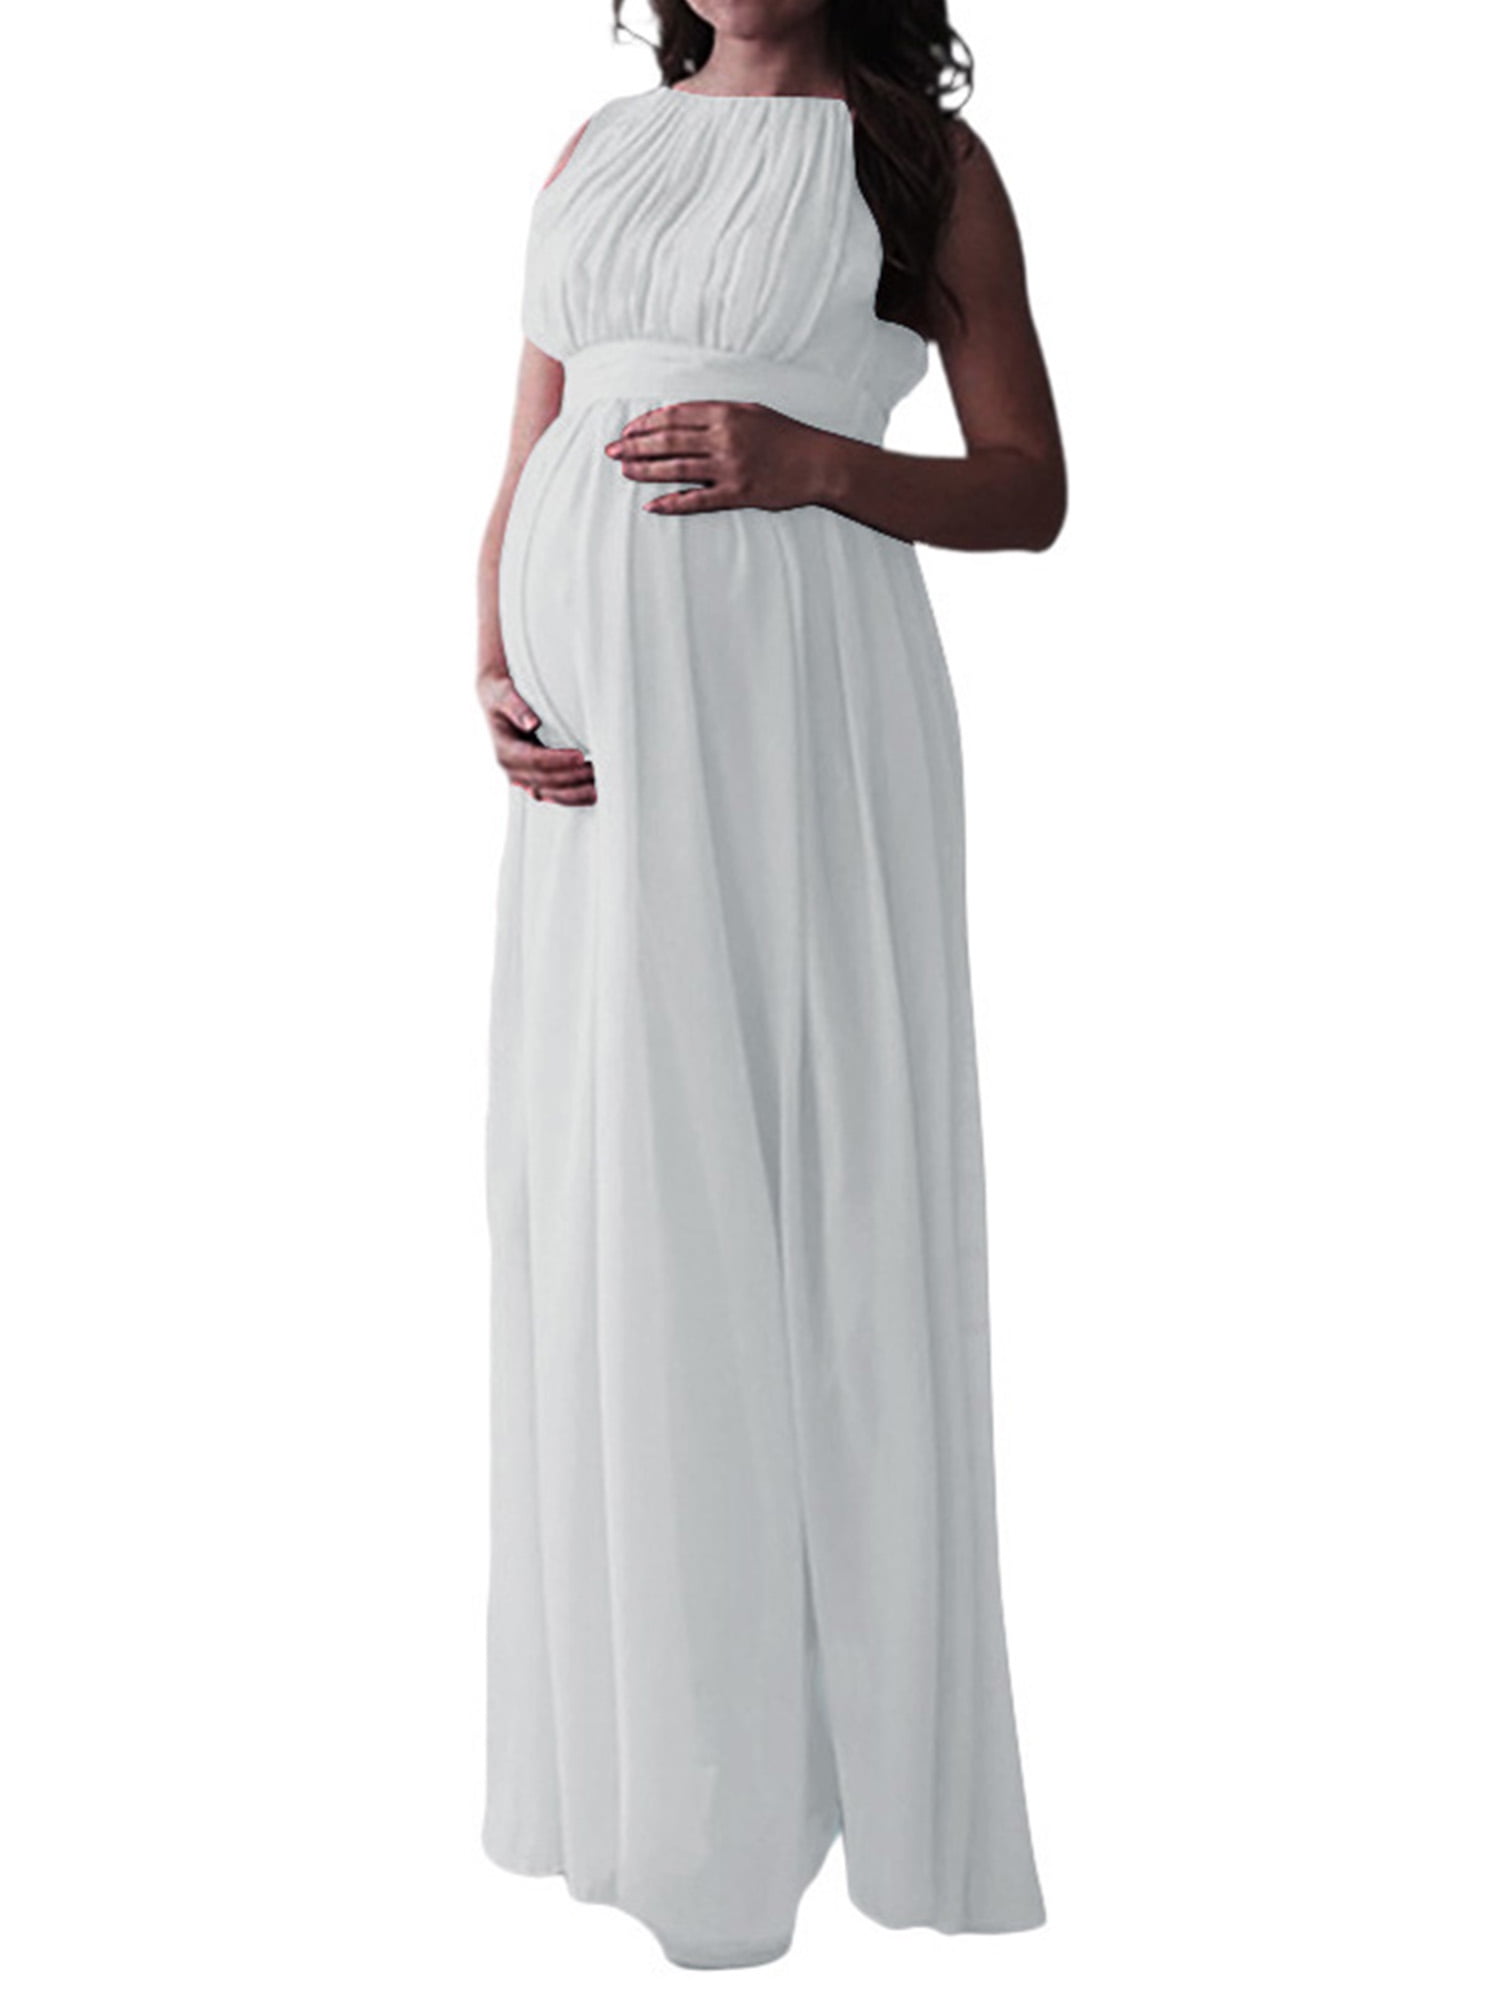 Women Sleeveless Maternity Dress Halter Neck Split Side Solid Flowy Dress with Belted 